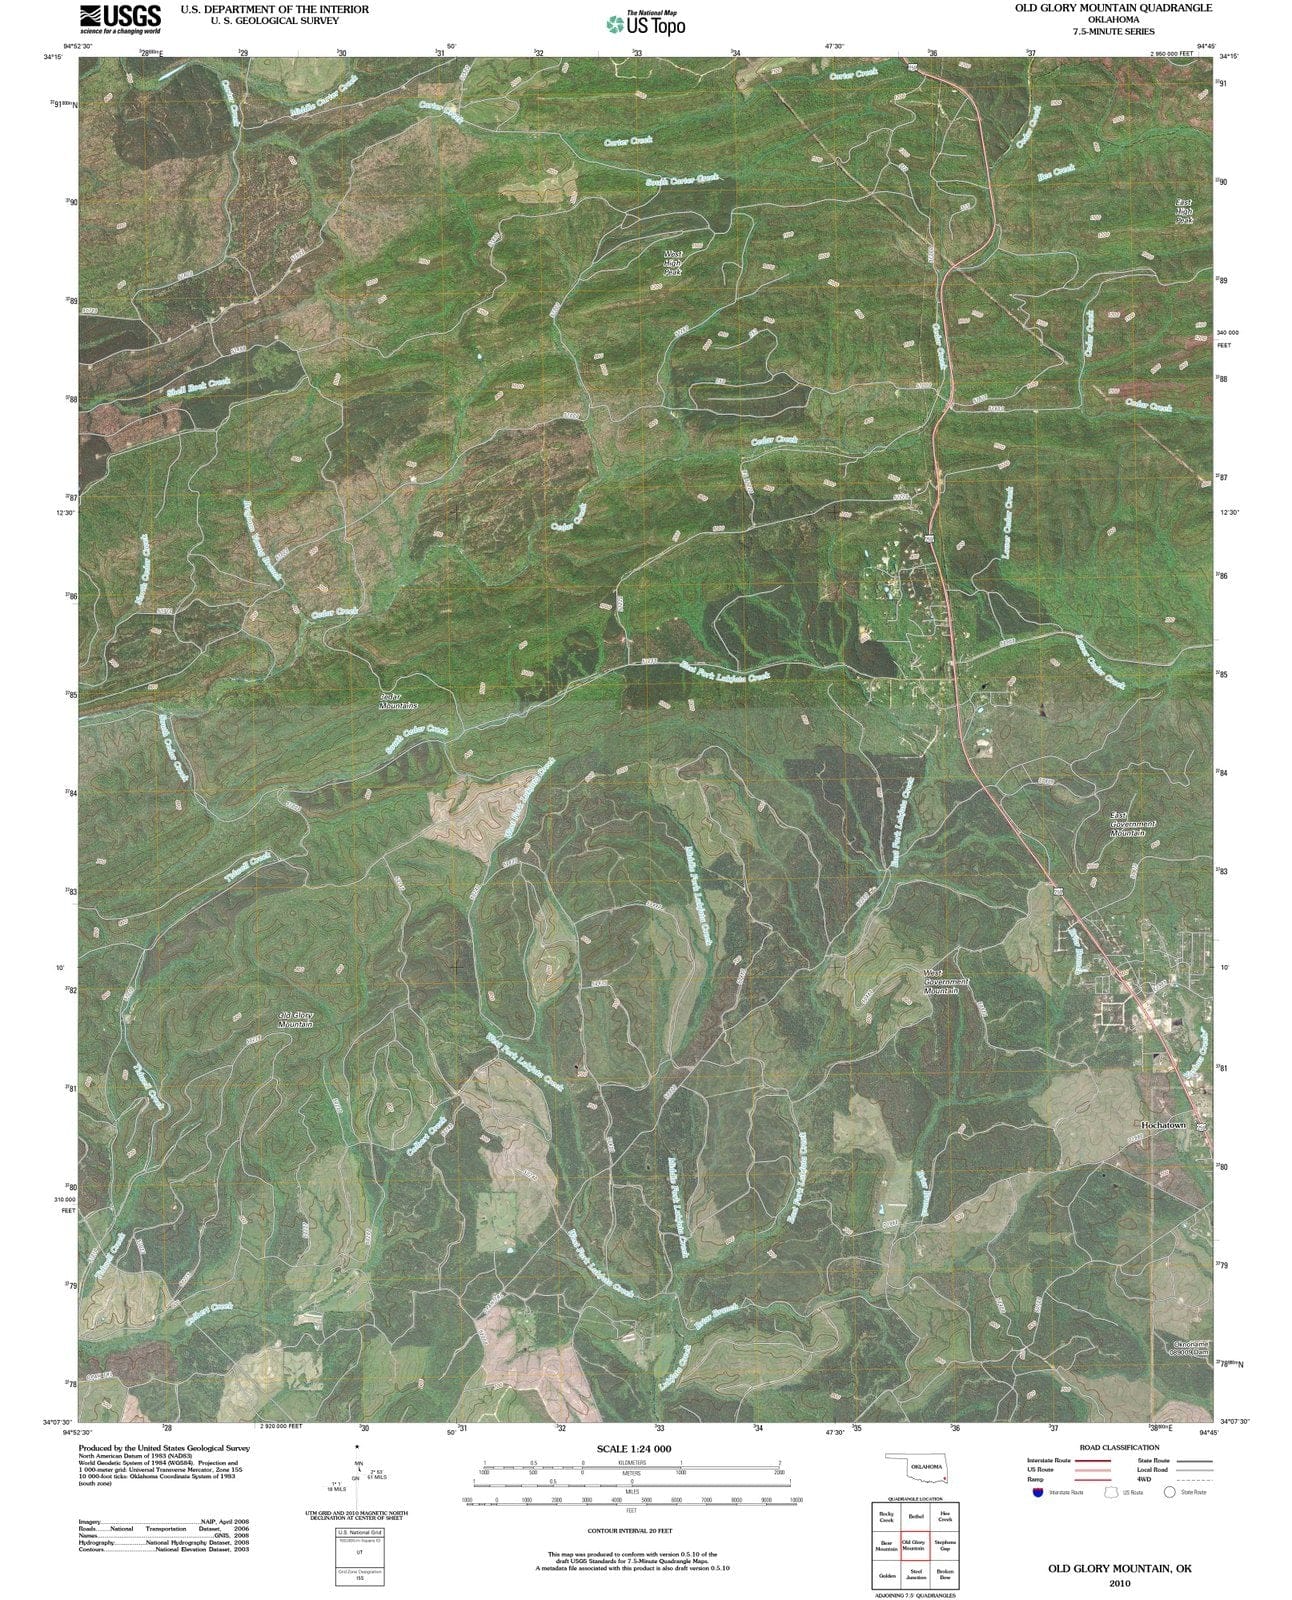 2010 Old Glory Mountain, OK - Oklahoma - USGS Topographic Map